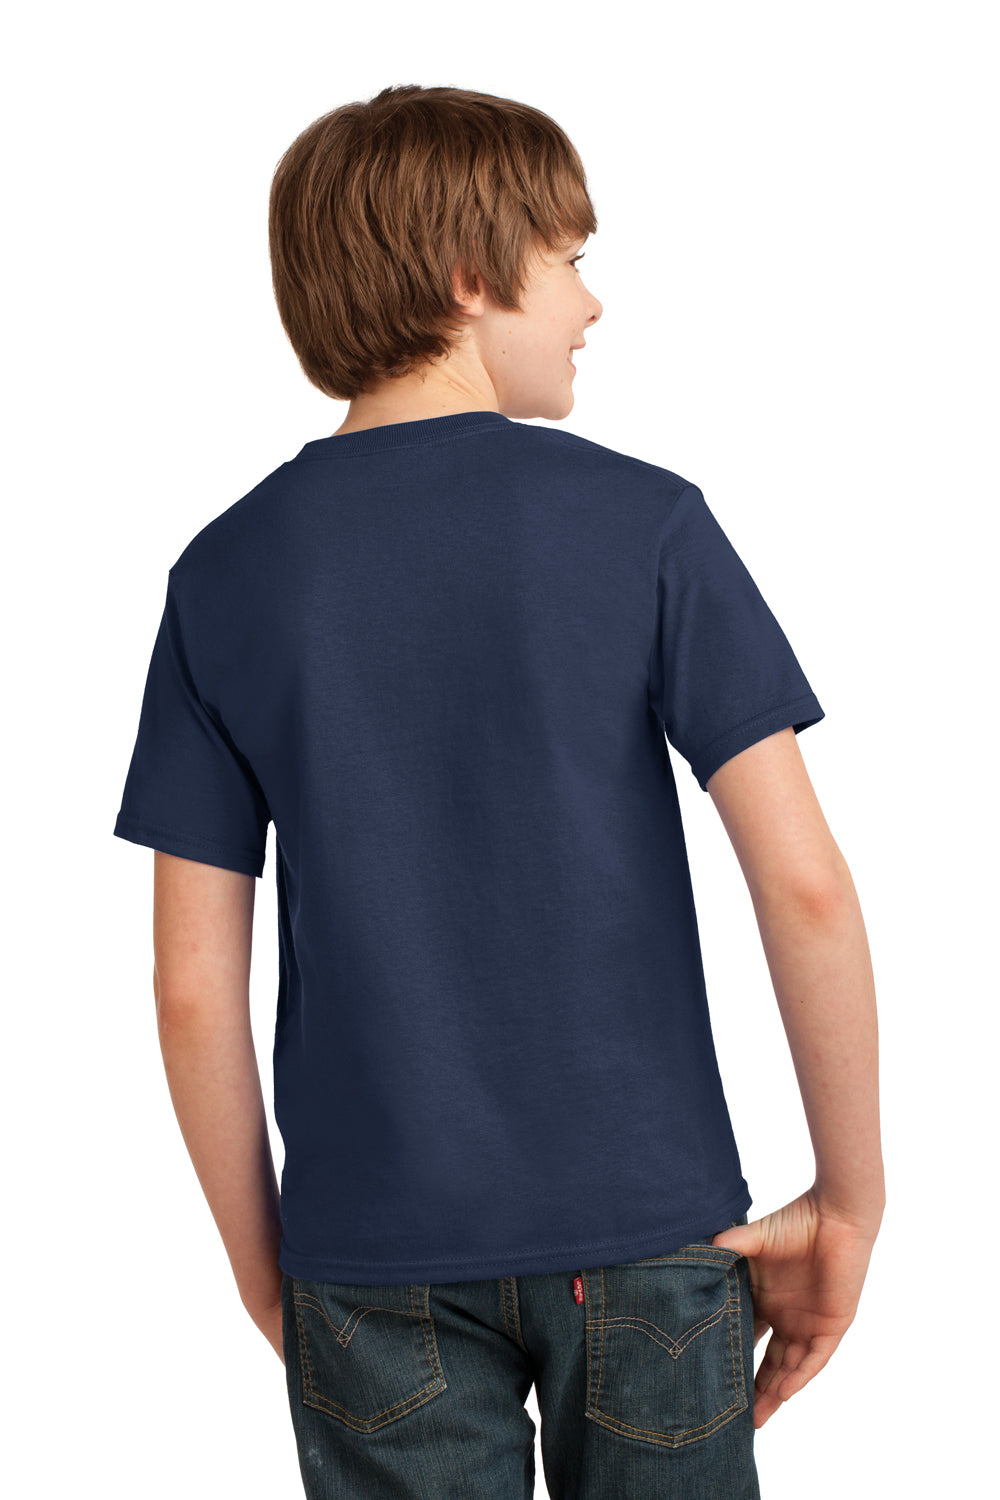 Port & Company PC61Y Youth Essential Short Sleeve Crewneck T-Shirt Navy Blue Back